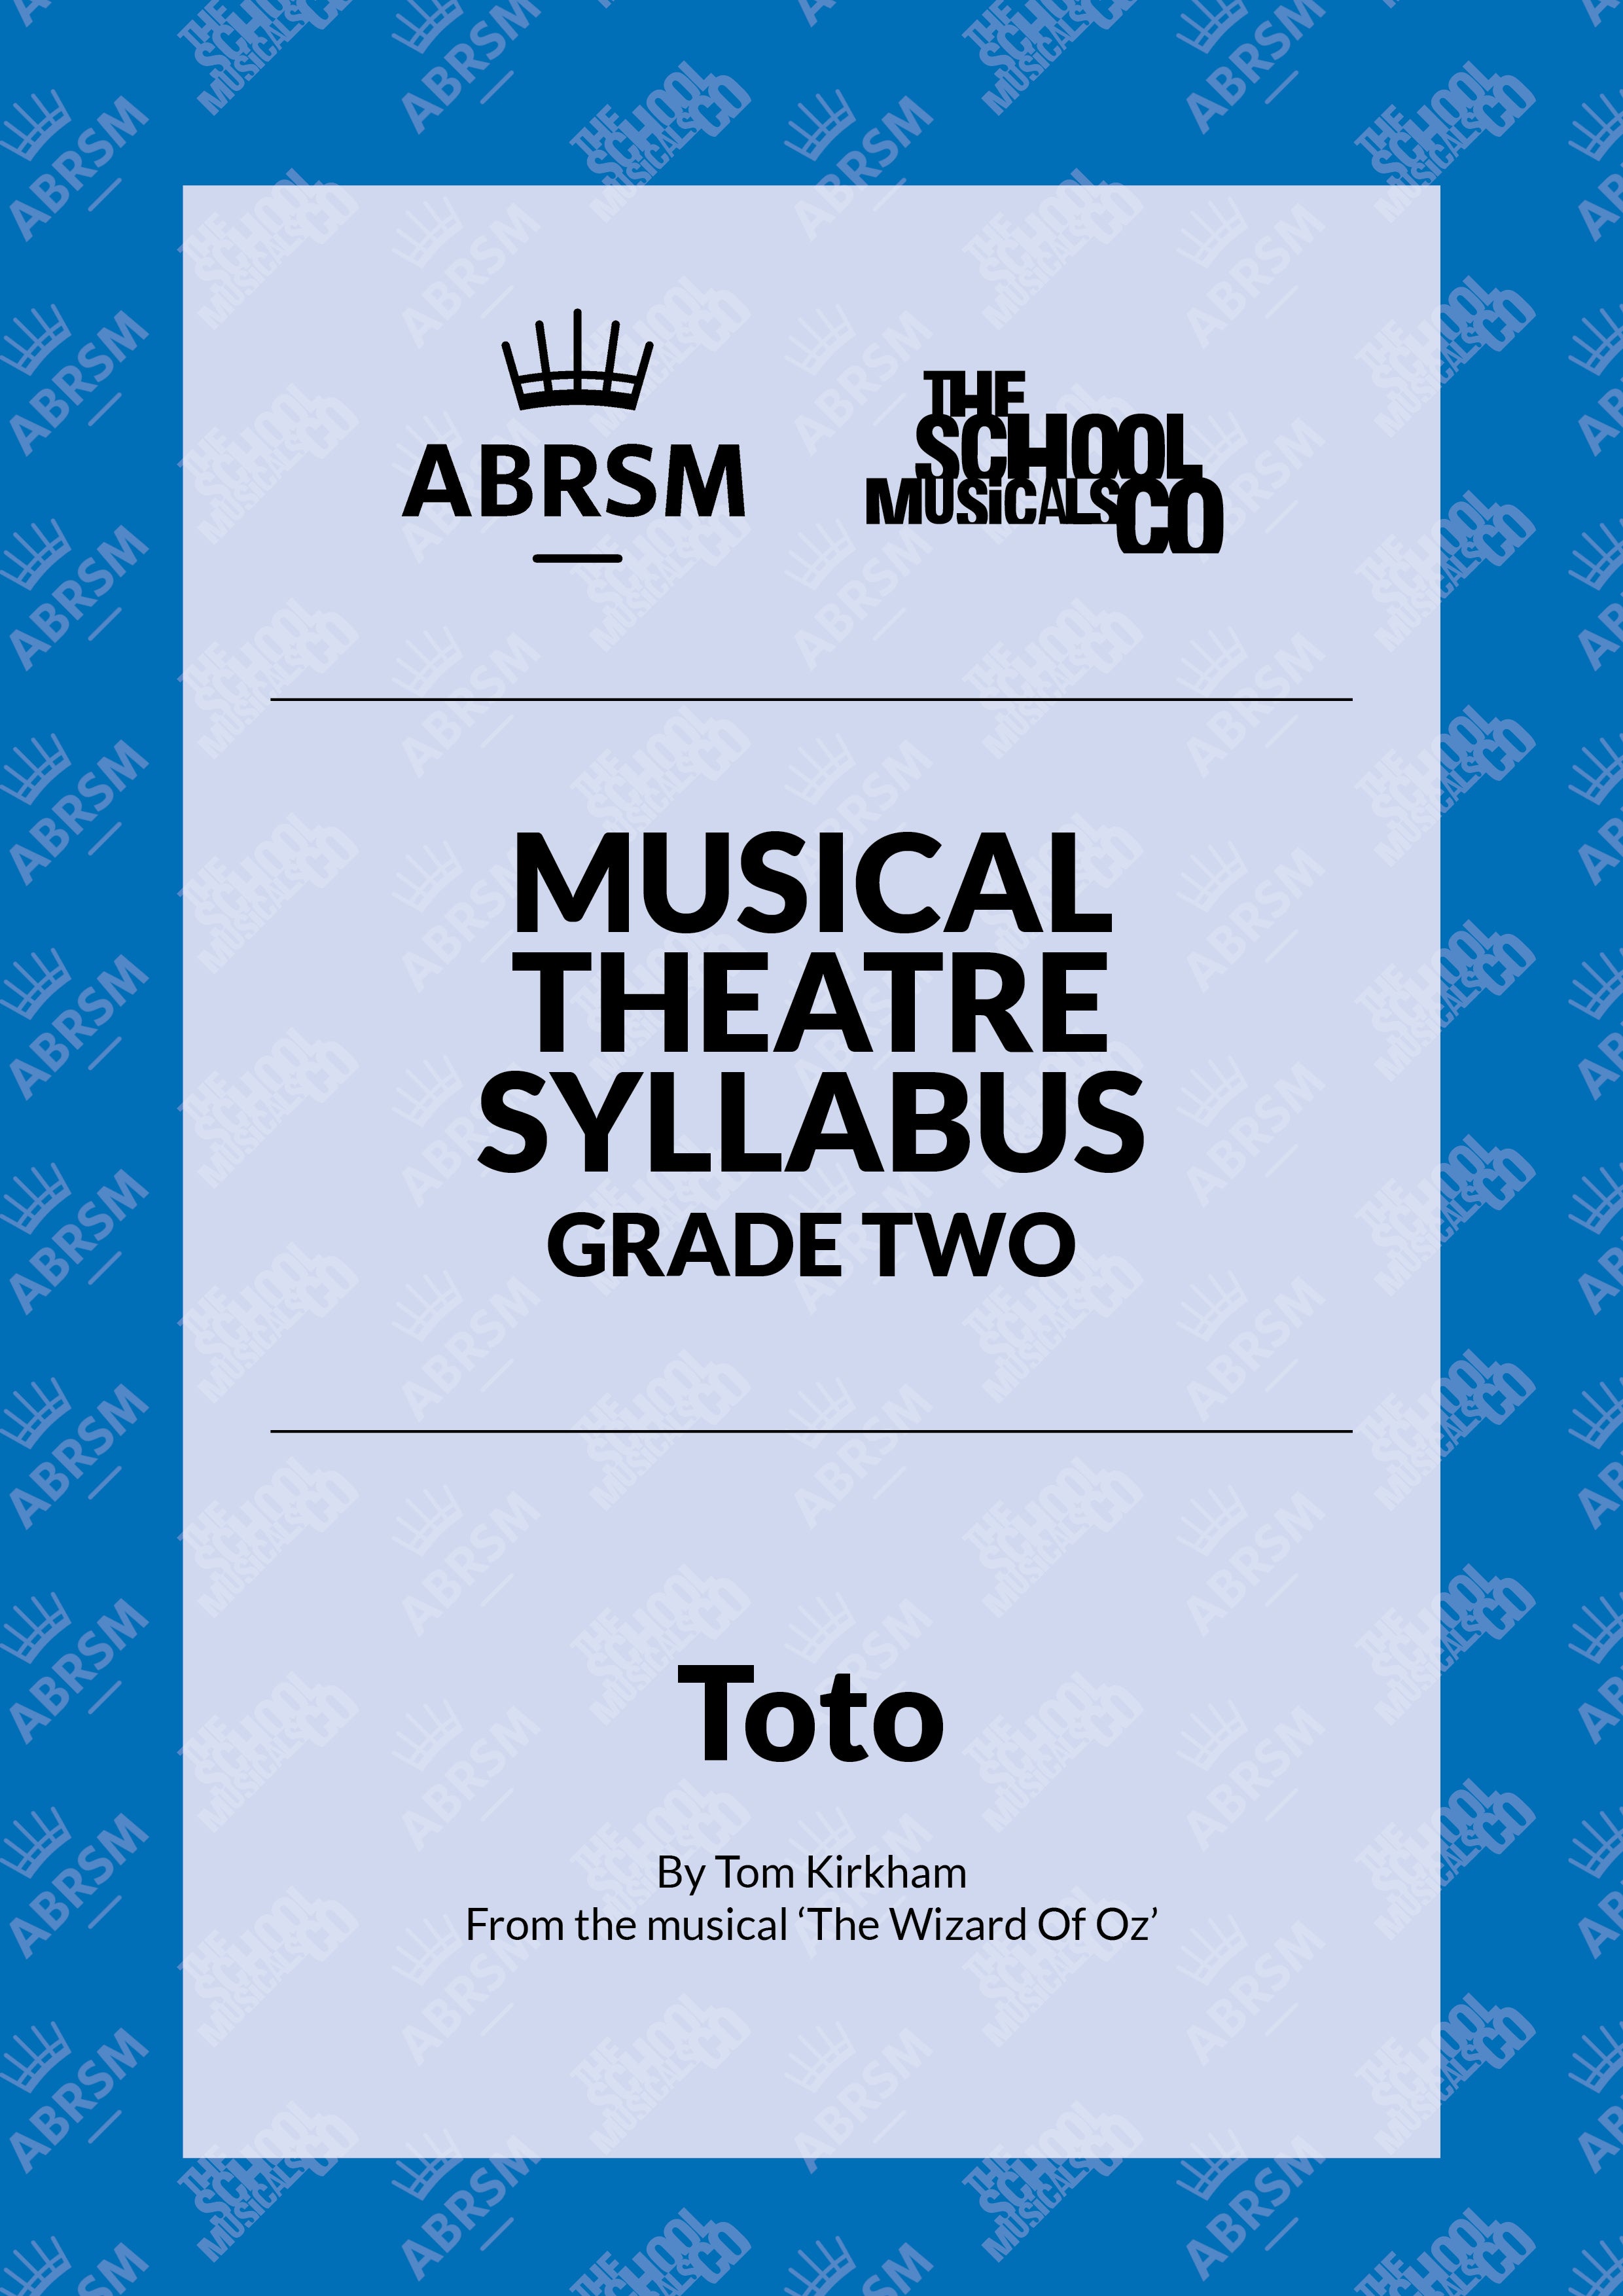 Toto - ABRSM Musical Theatre Syllabus Grade Two